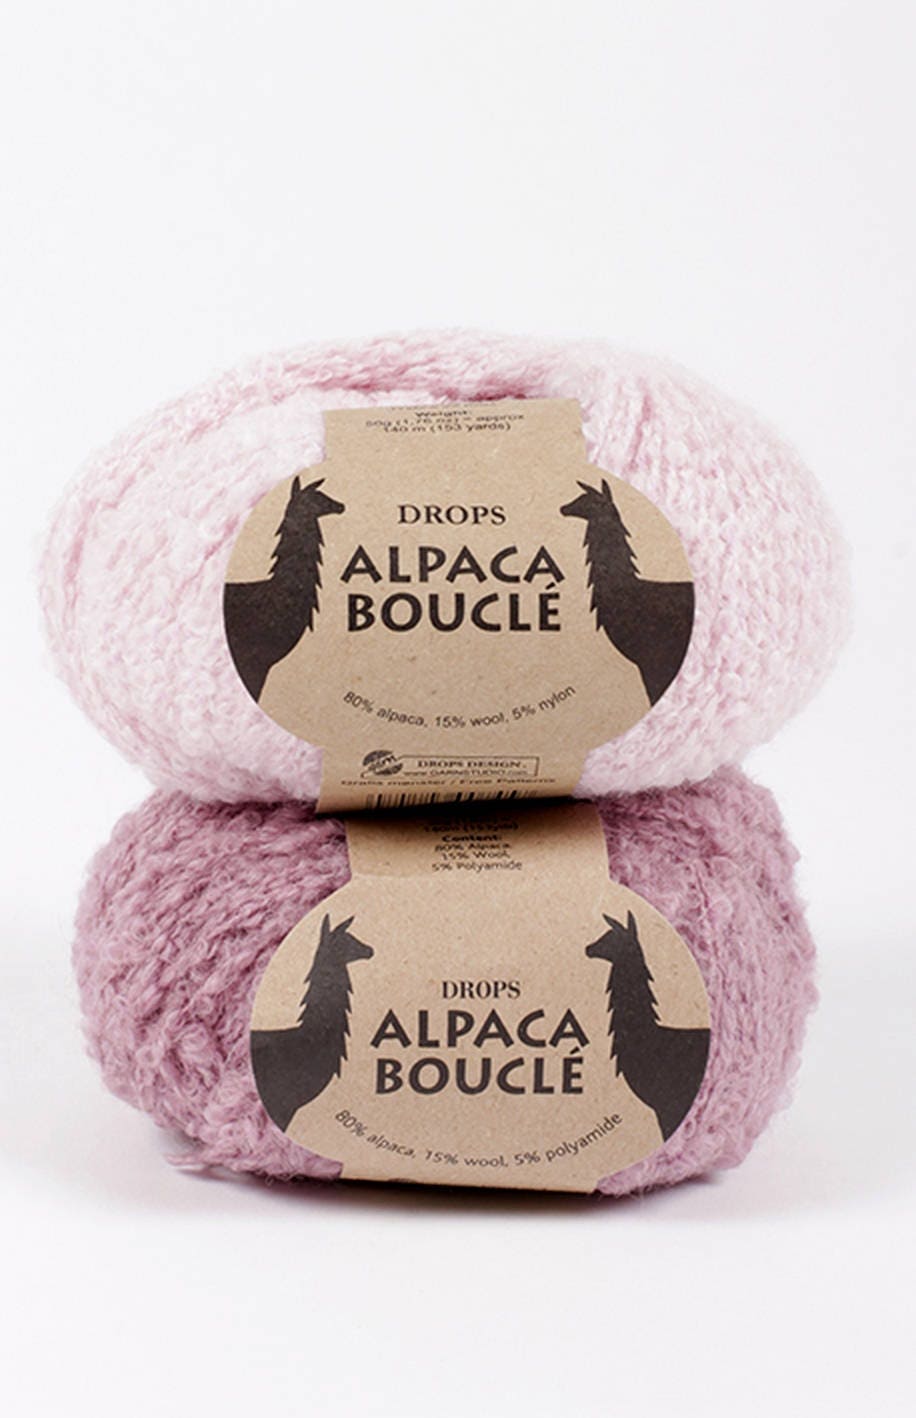 Alpaca Bouclé Soft light and full of loops - Etsy